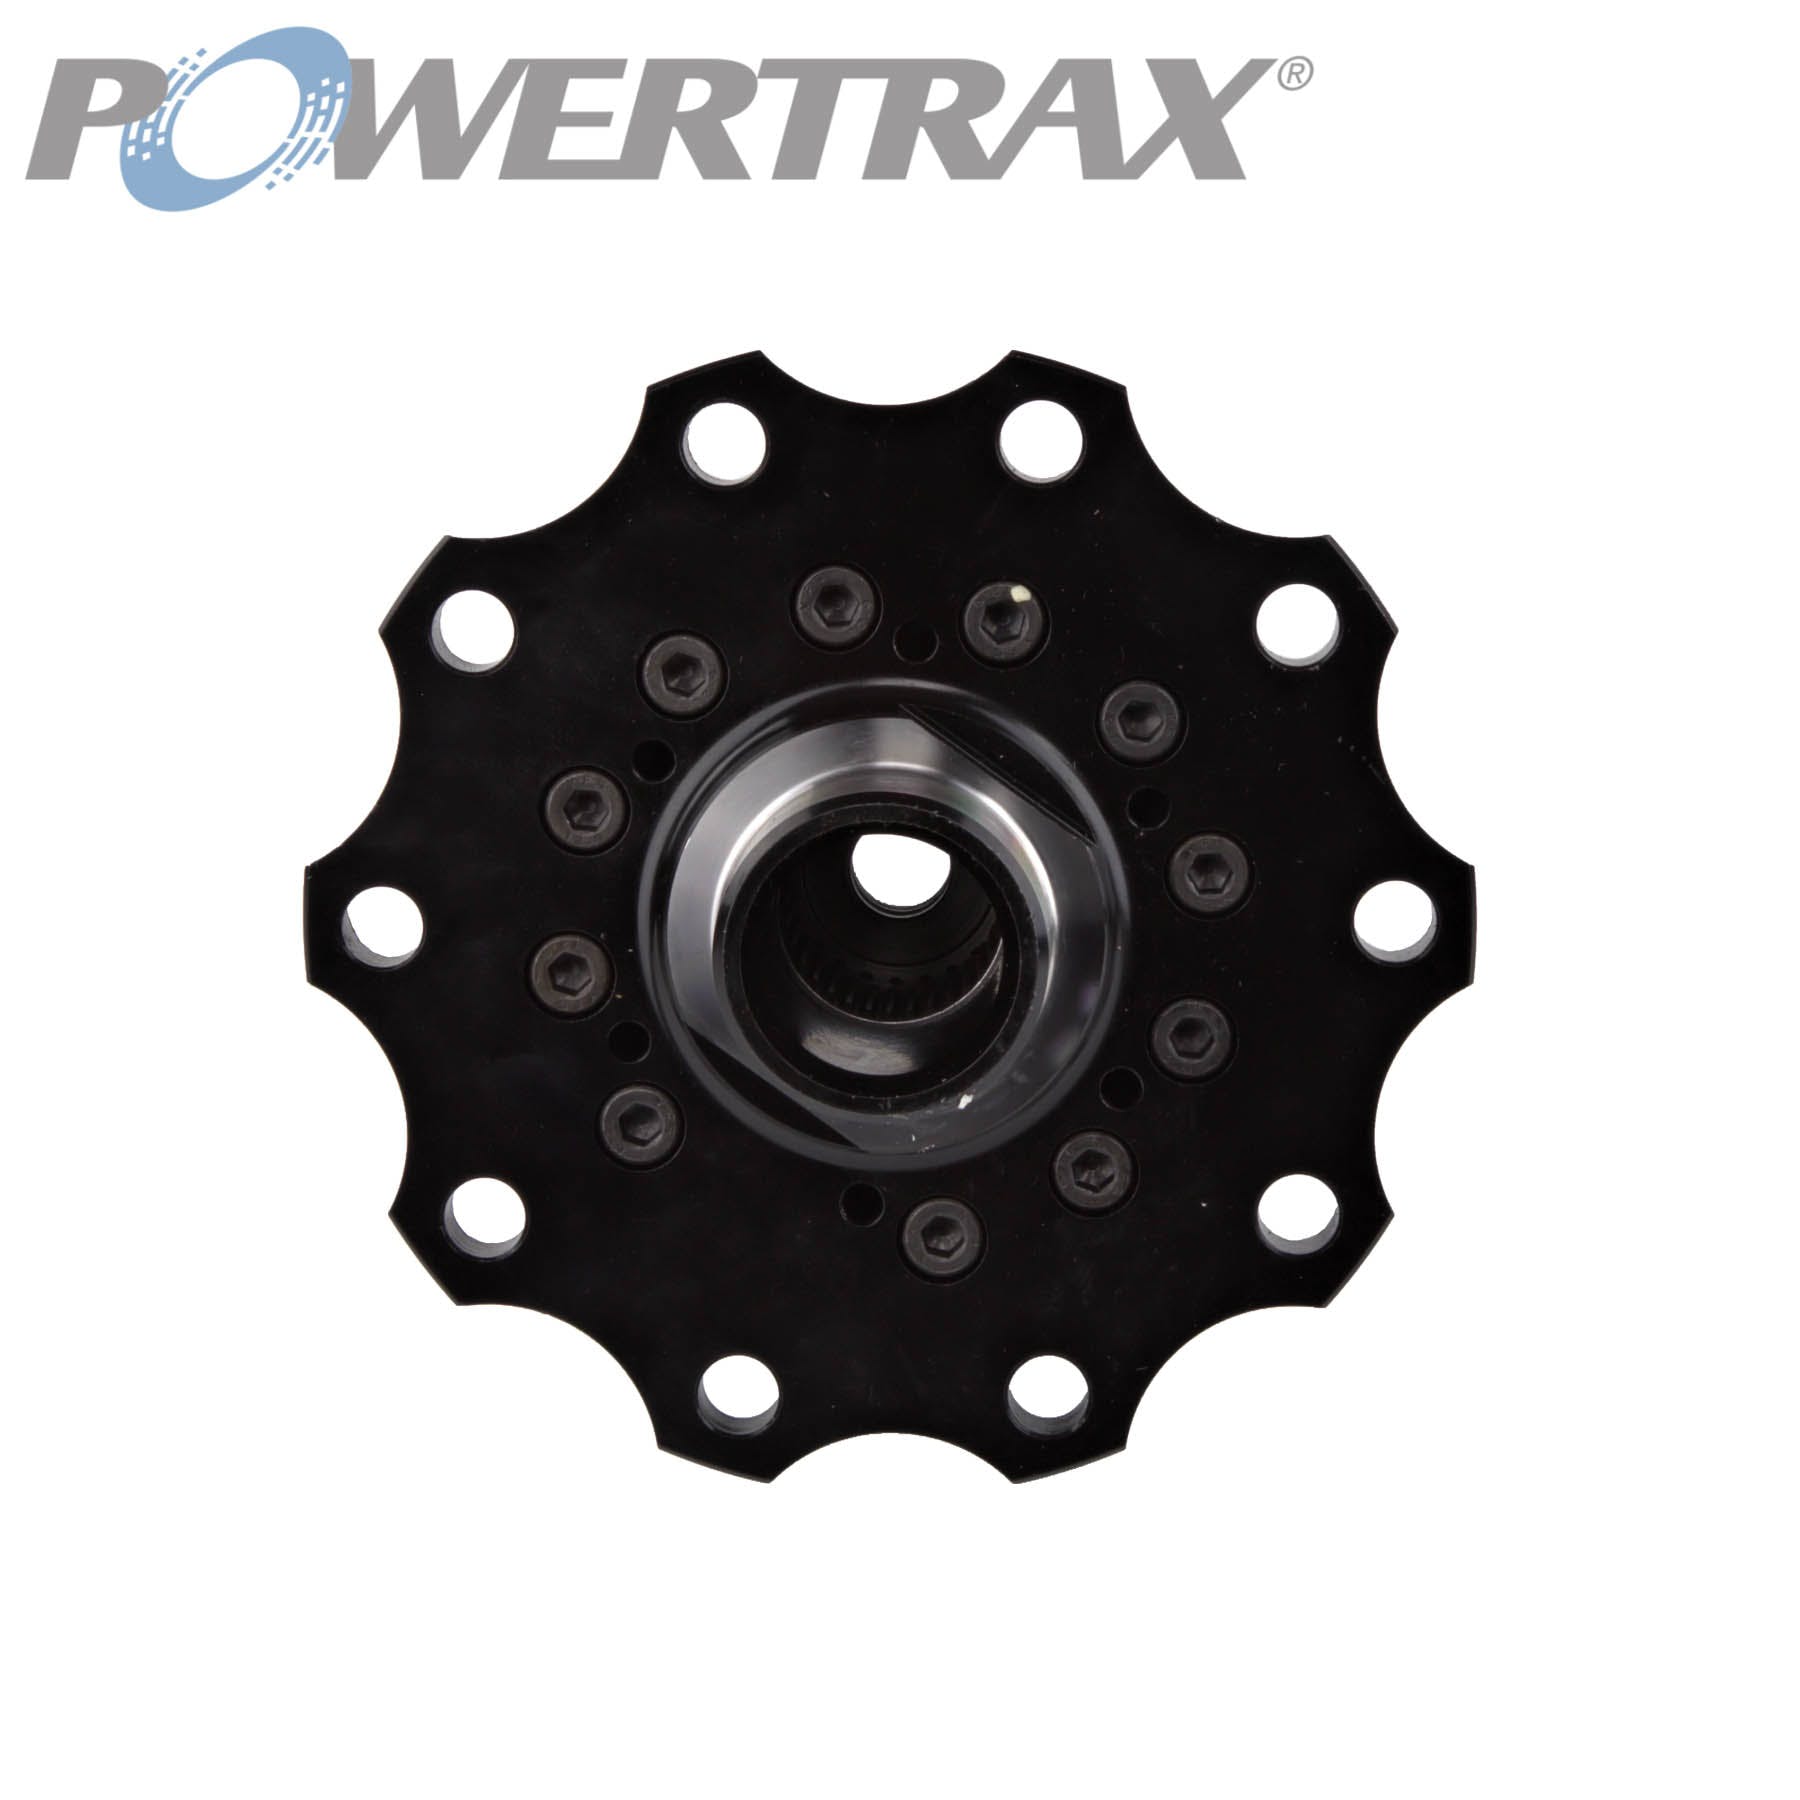 PowerTrax GT230432 Powertrax - Grip PRO Traction System